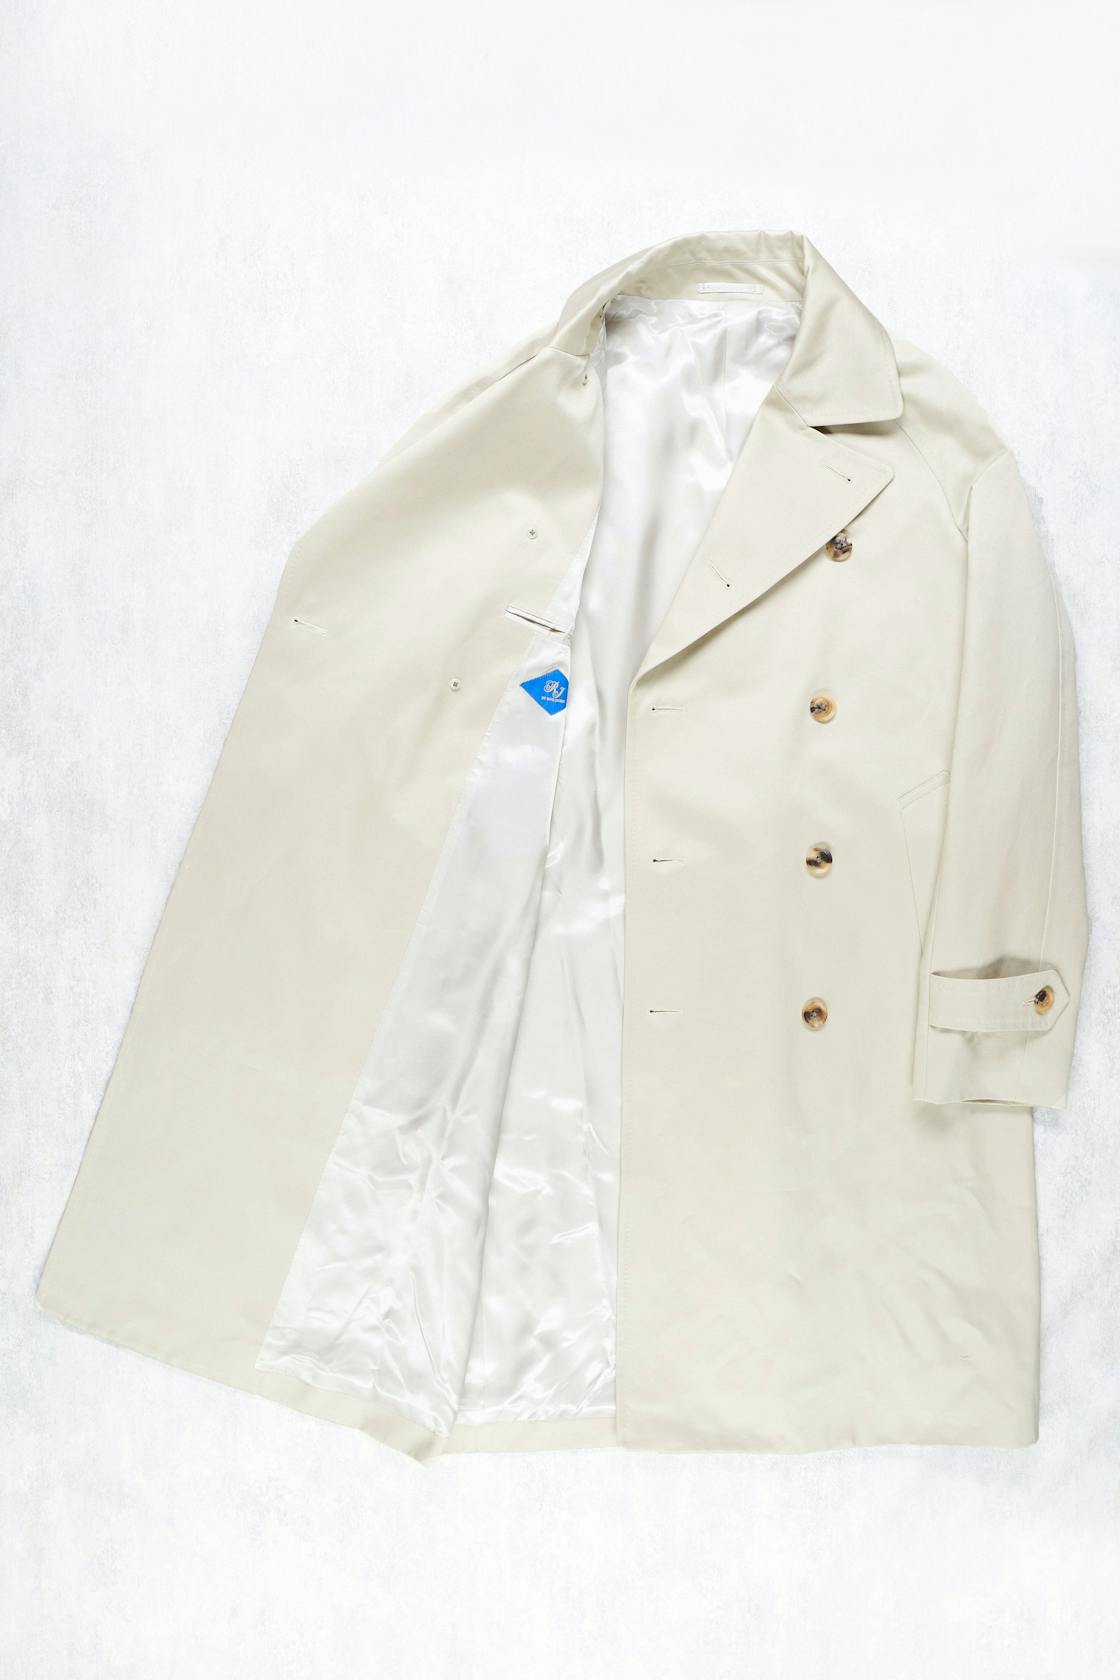 Ring Jacket RJCO-10 Beige Waxed Cotton Double Breasted Raglan Overcoat